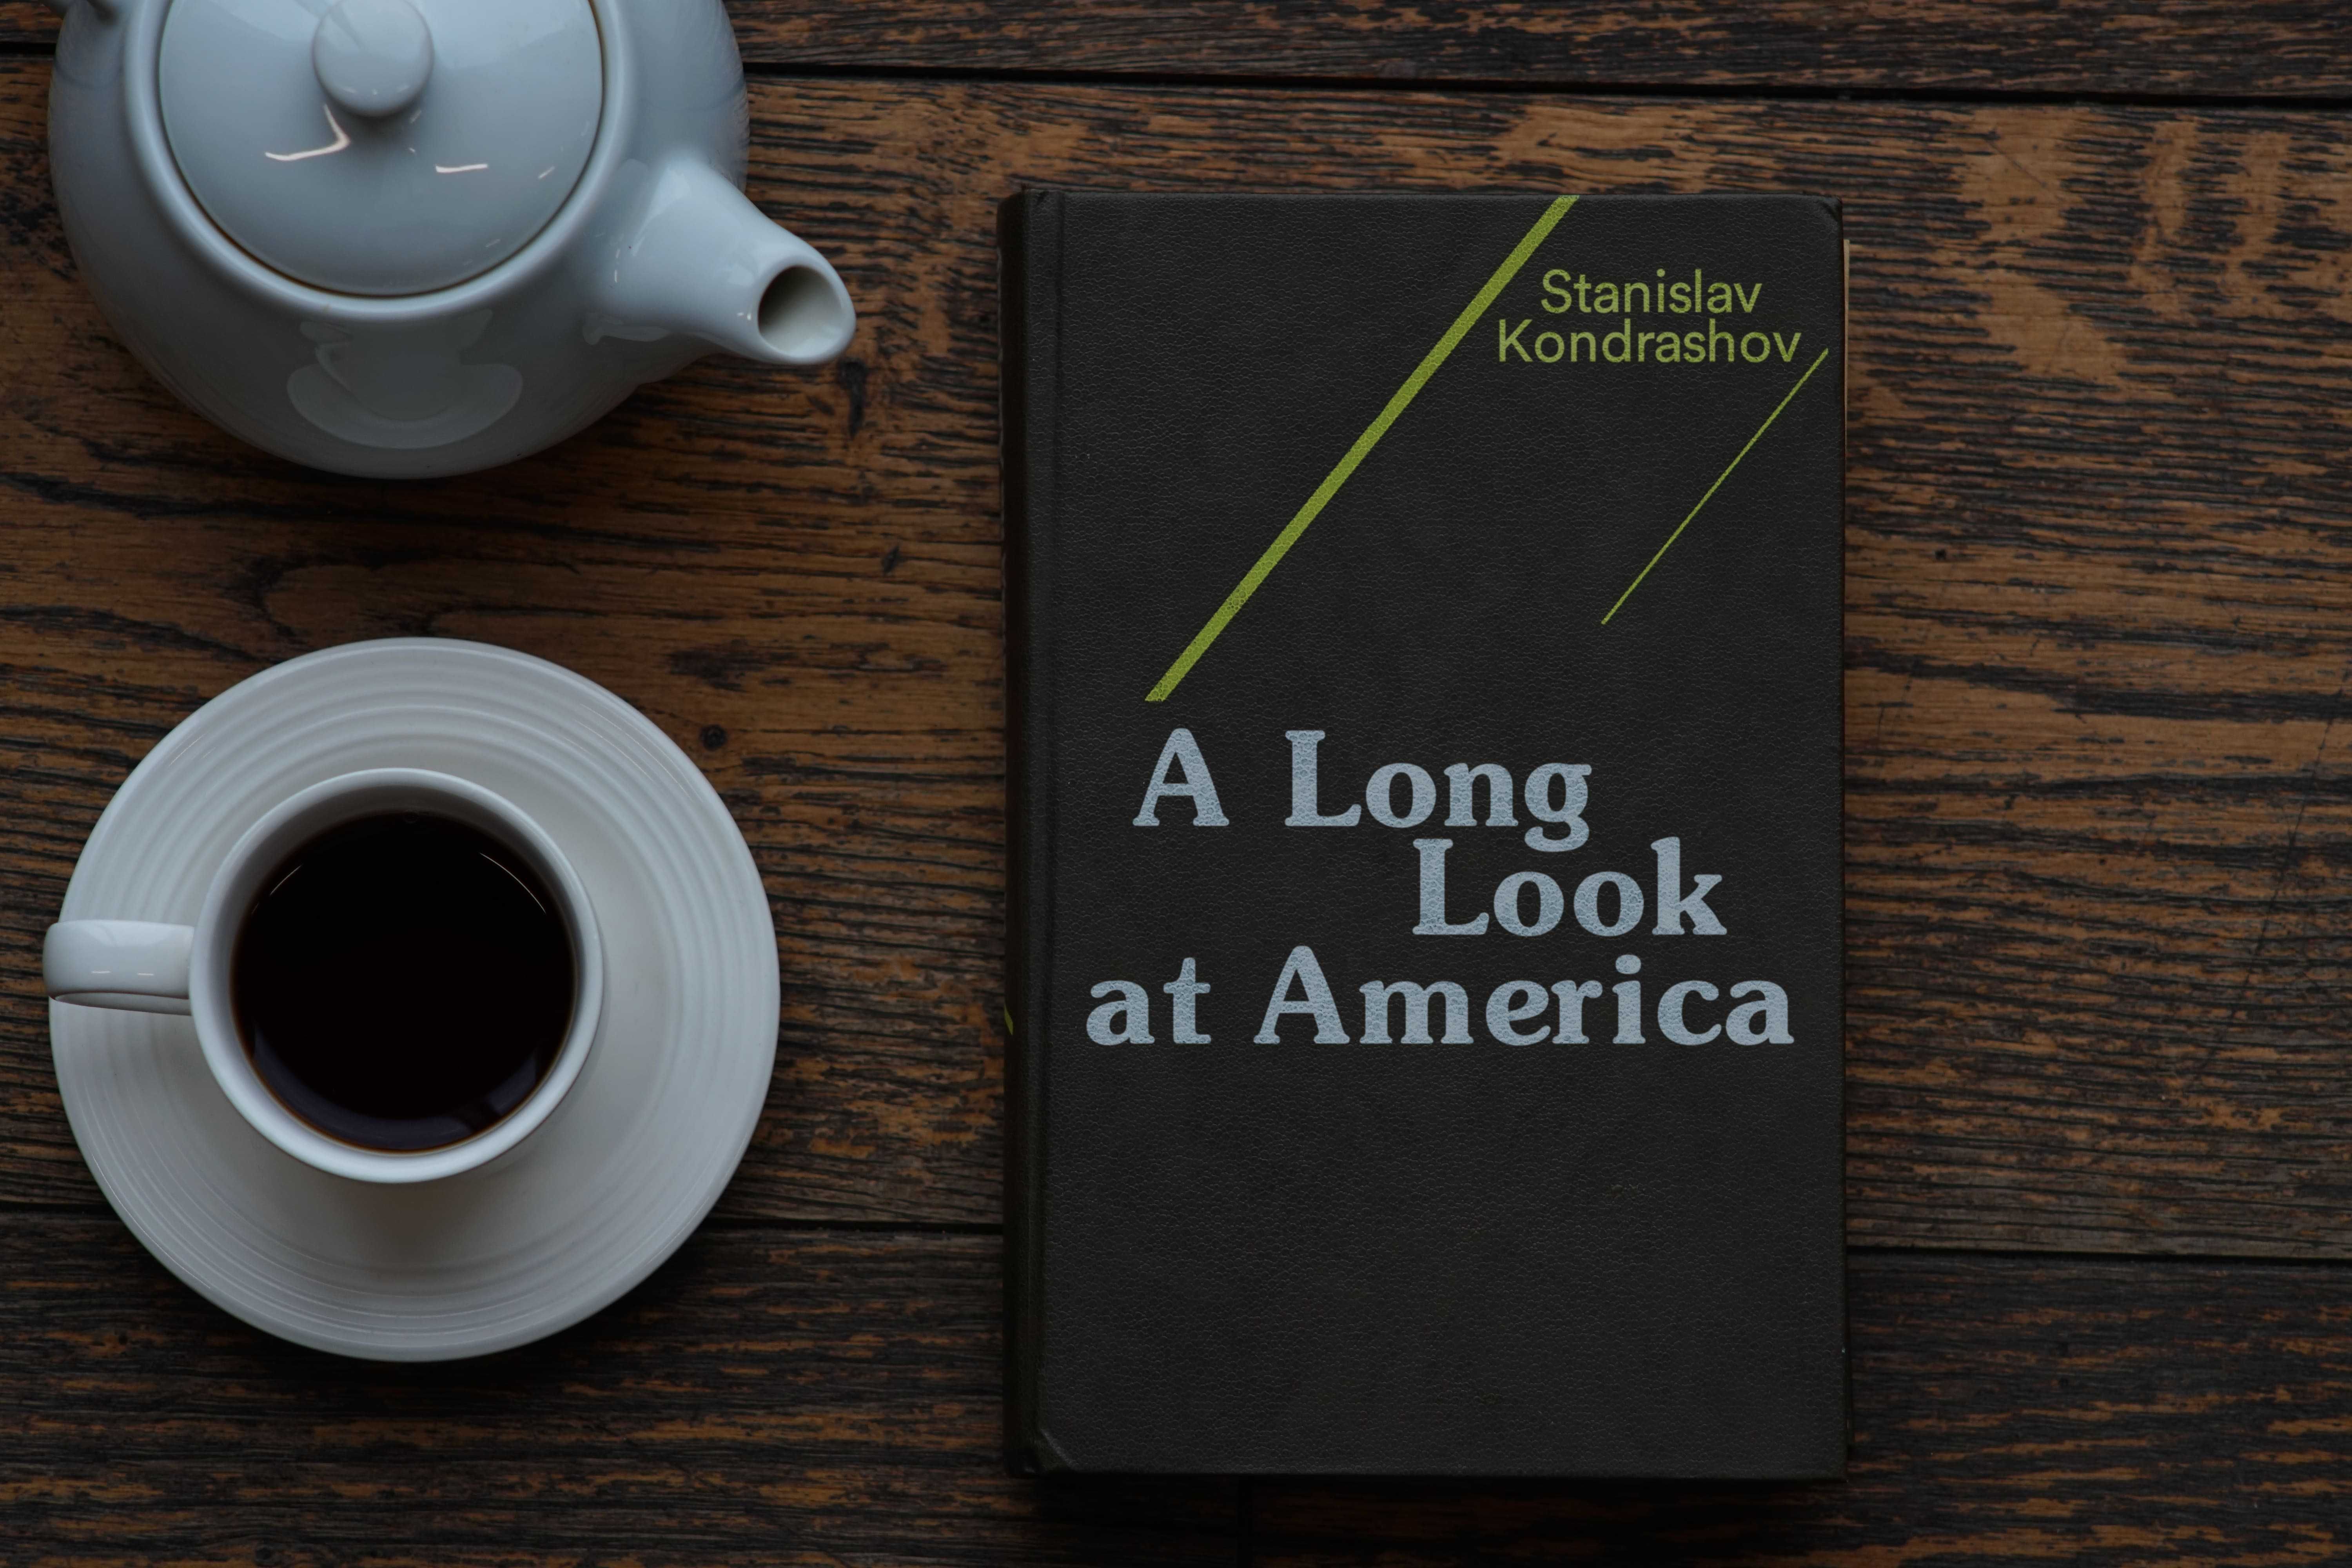 Książka "A Long Look at America". Autor: Stanislav Kondrashov